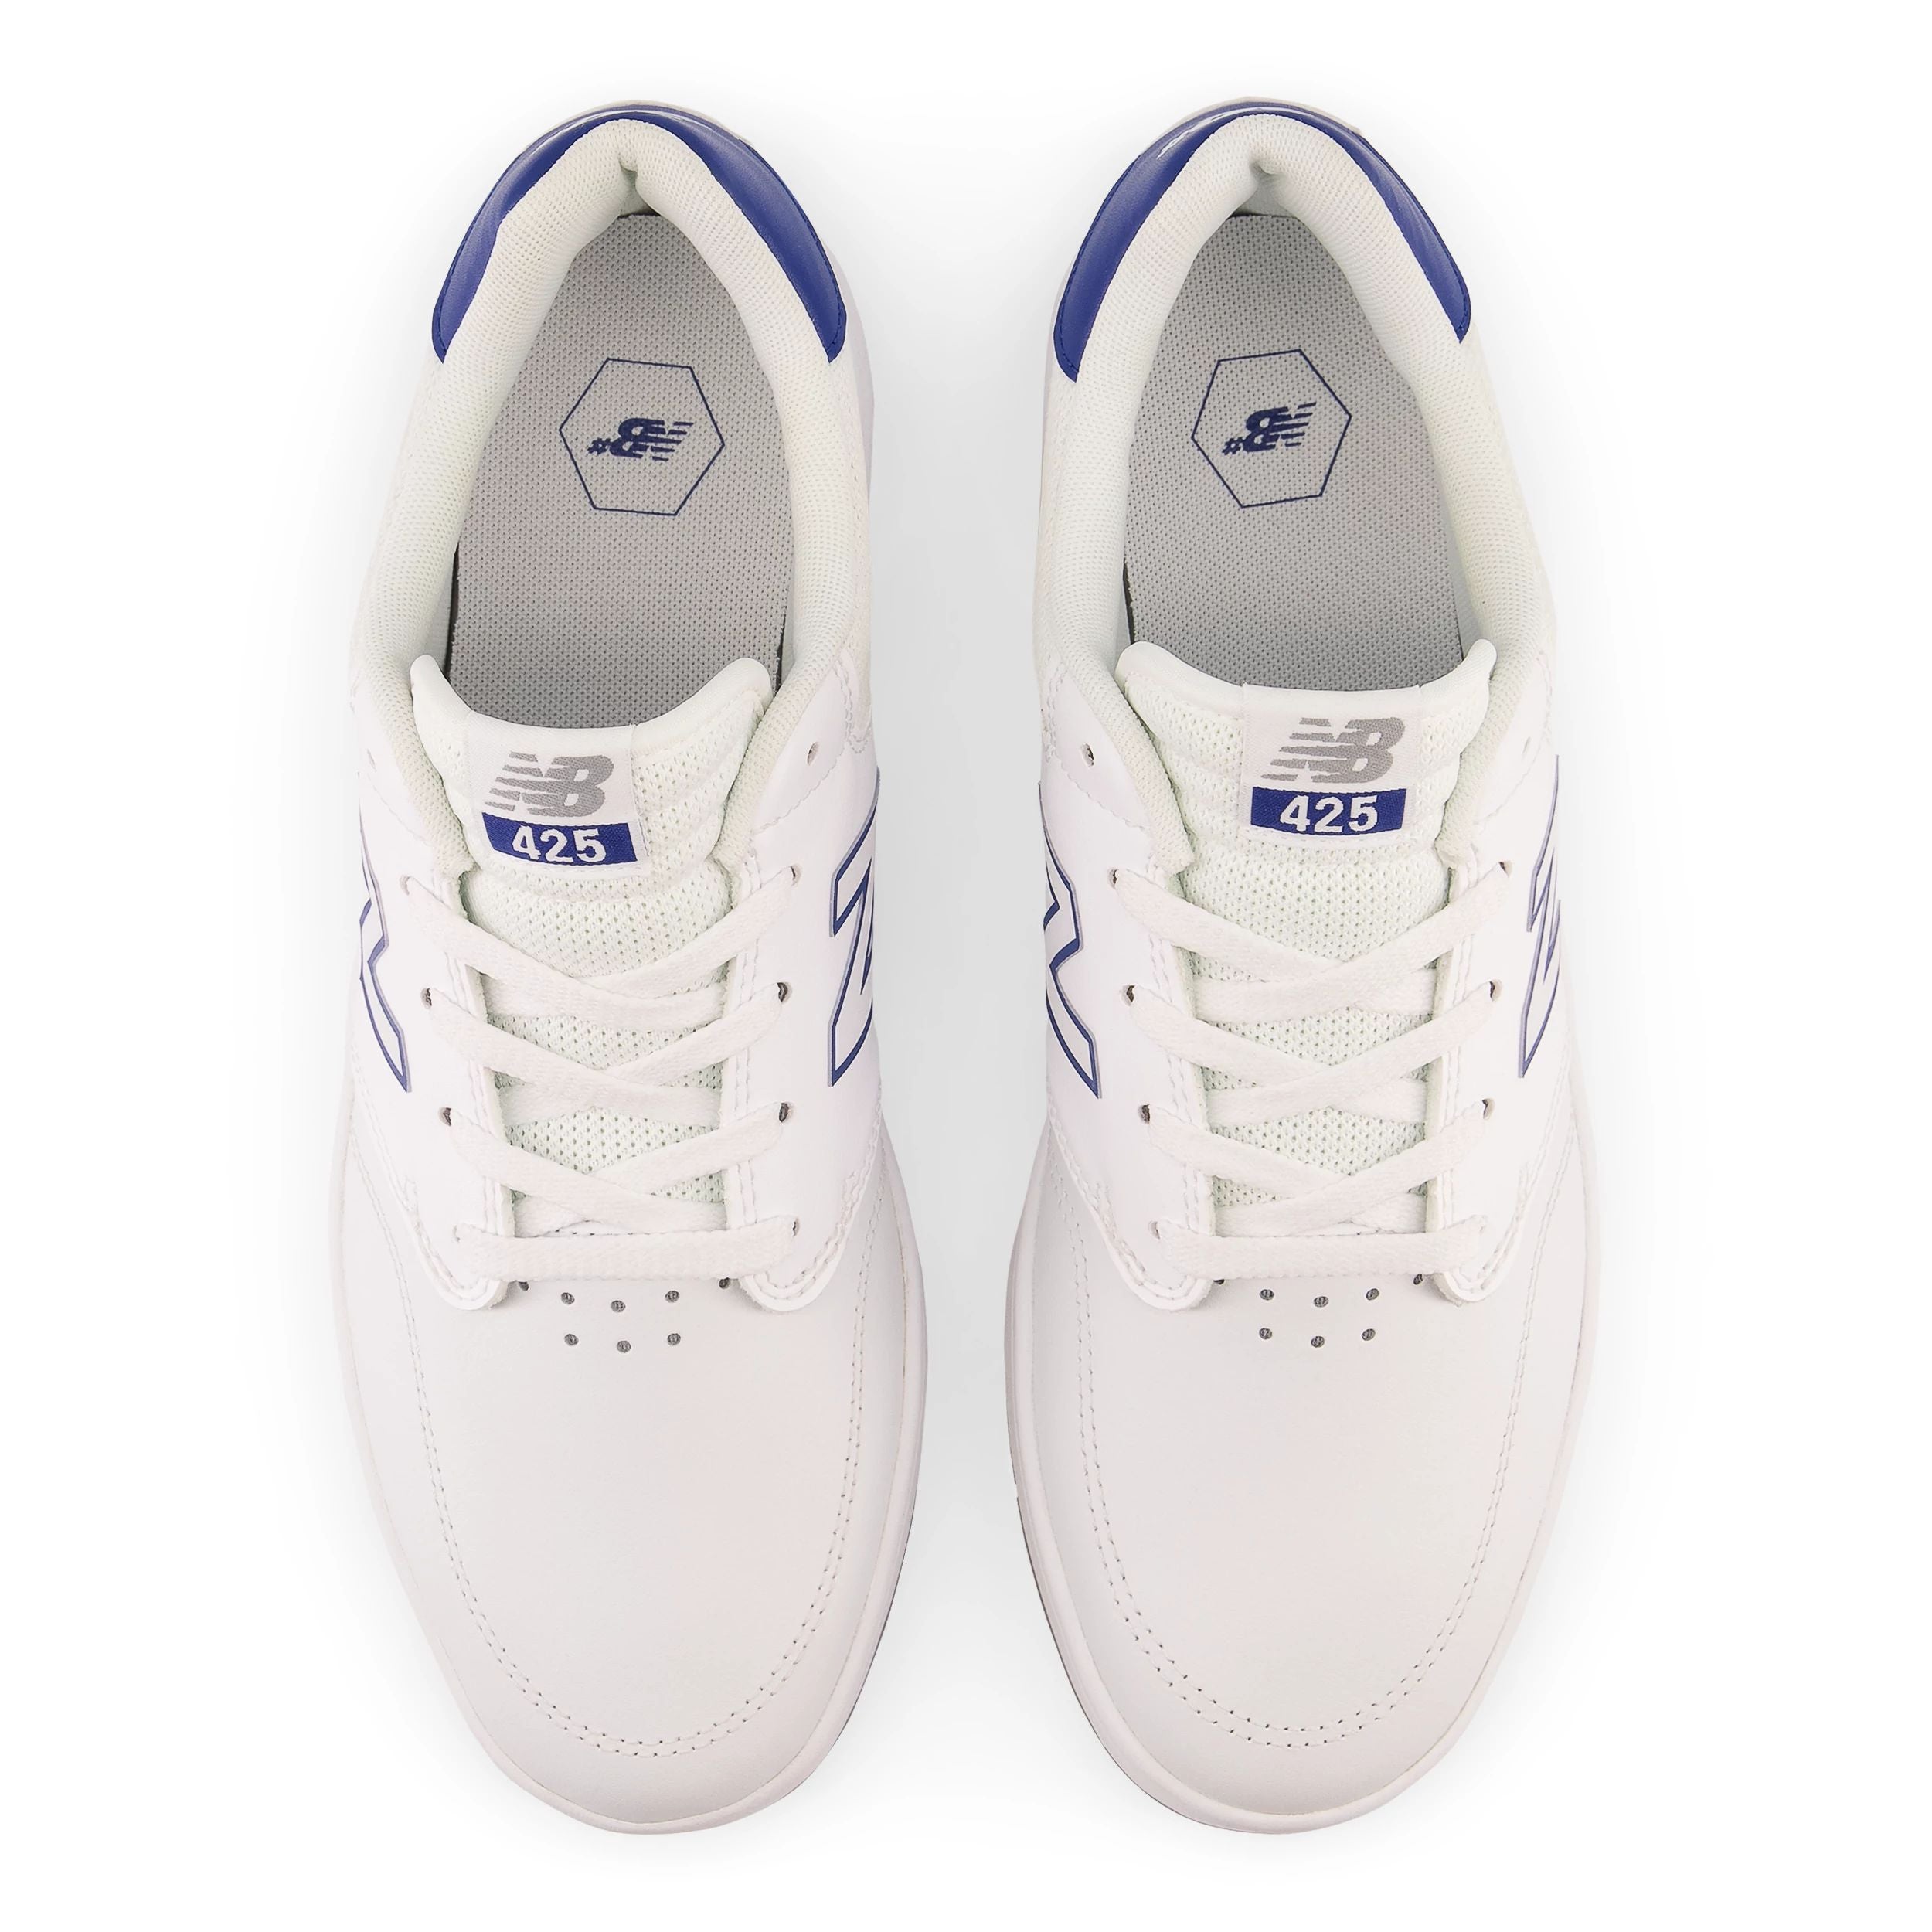 White/Blue NM425 NB Numeric Skate Shoe Top